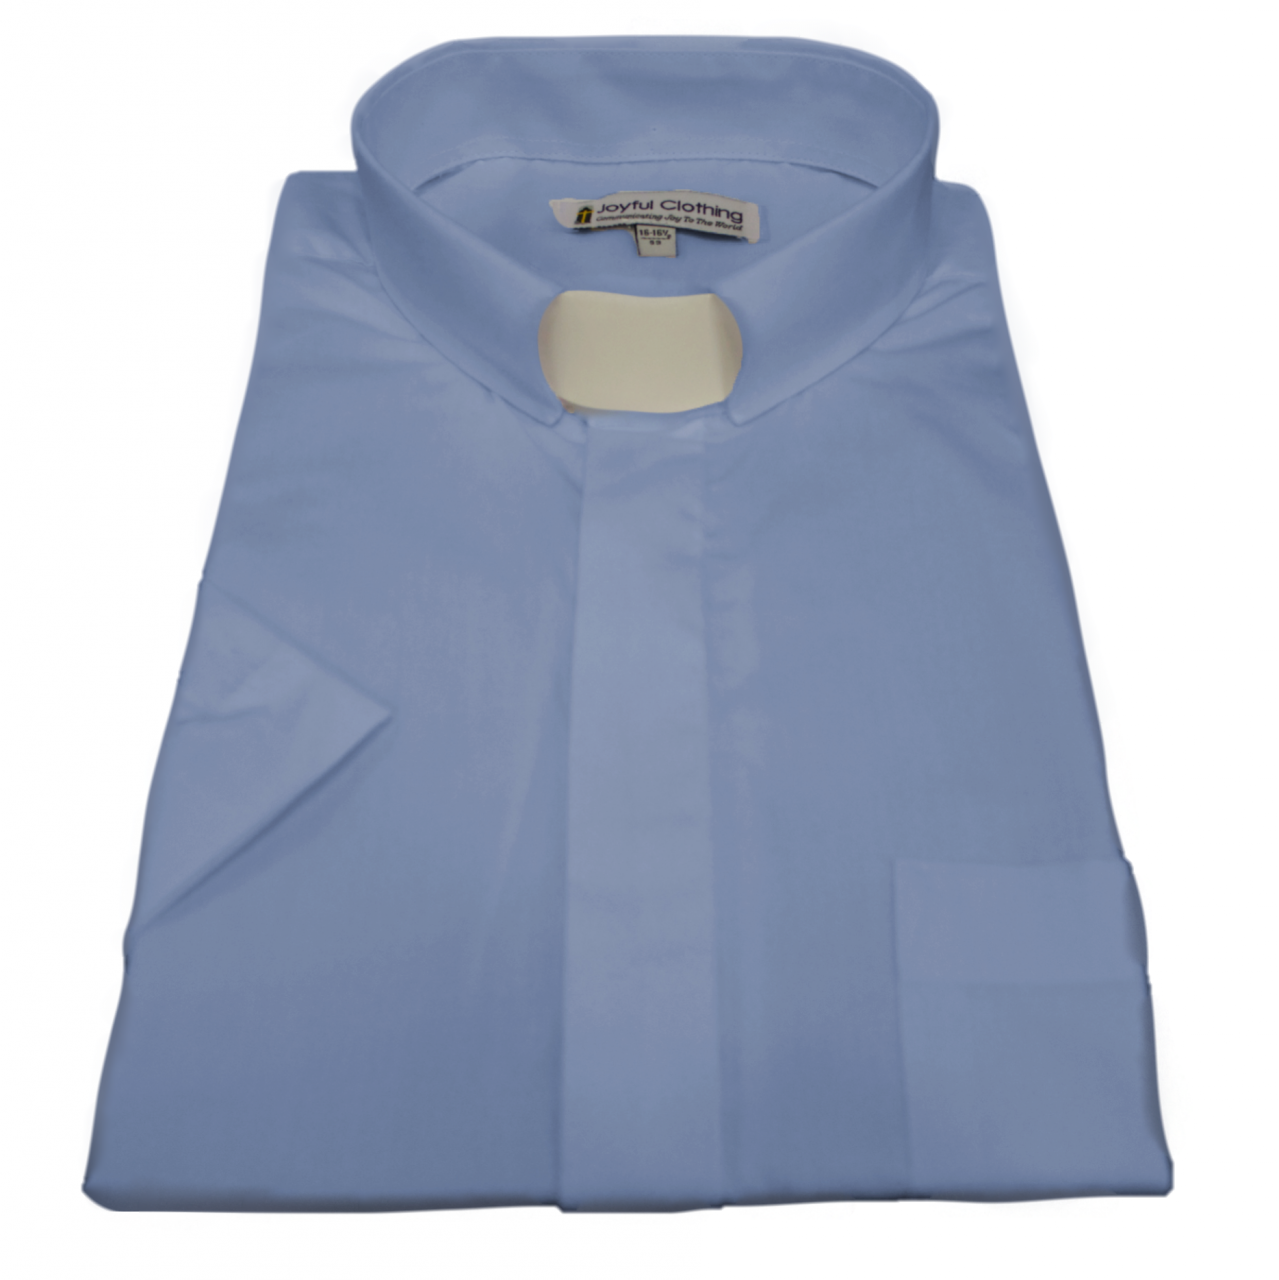 163. Men's Short-Sleeve Tab-Collar Clergy Shirt - Light Blue